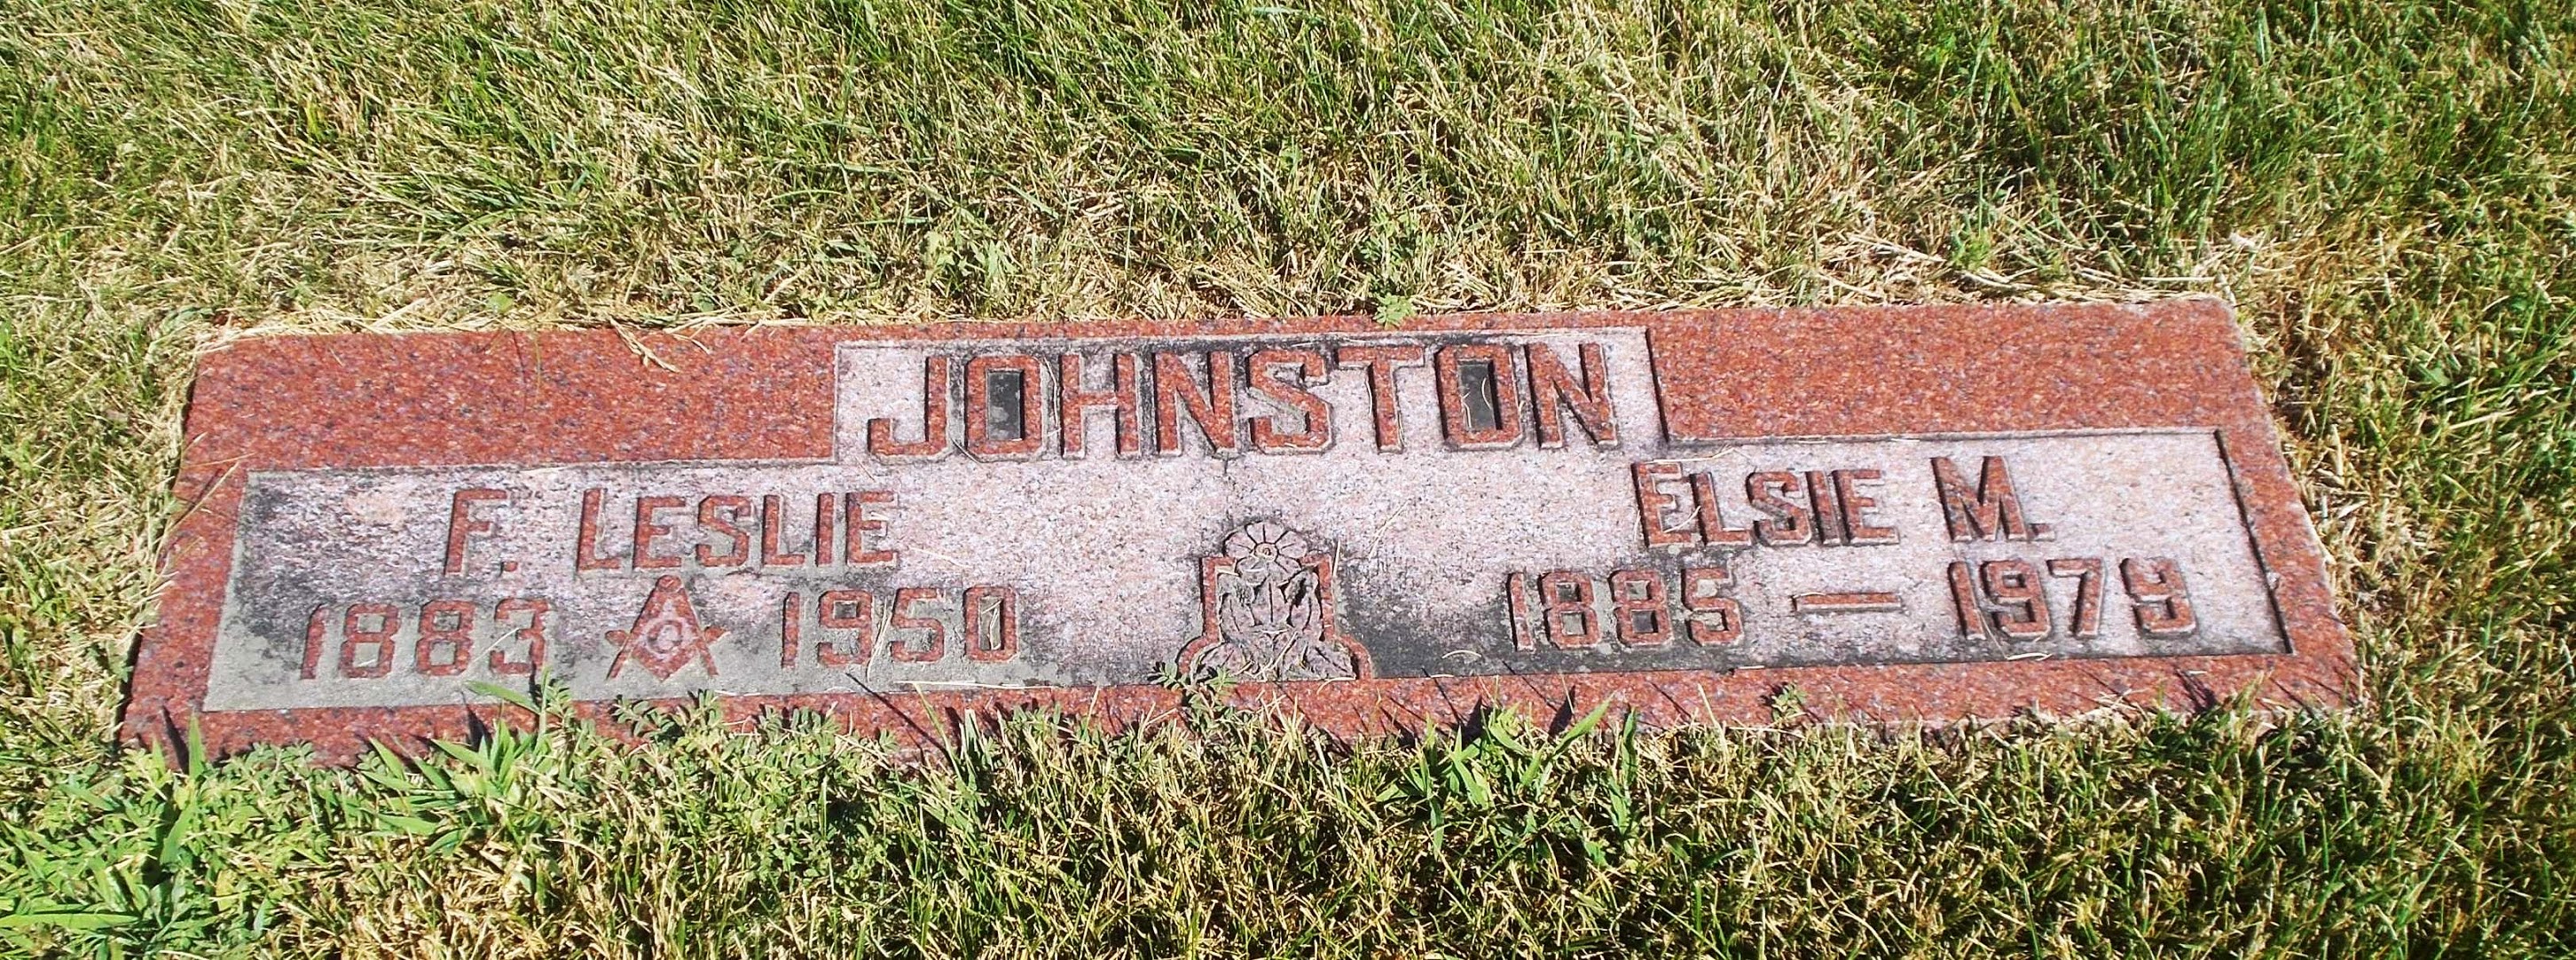 F Leslie Johnston